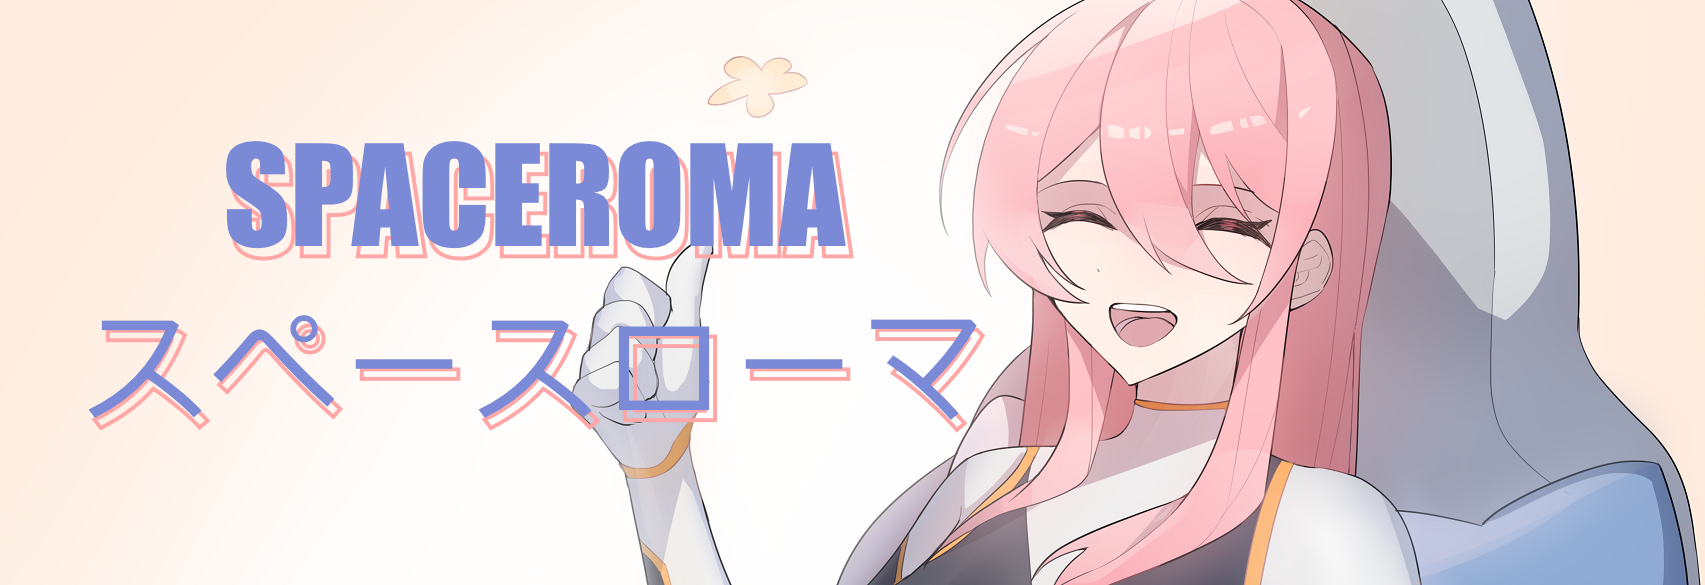 SpaceRoma: Learn Japanese Characters Hiragana and Katakana